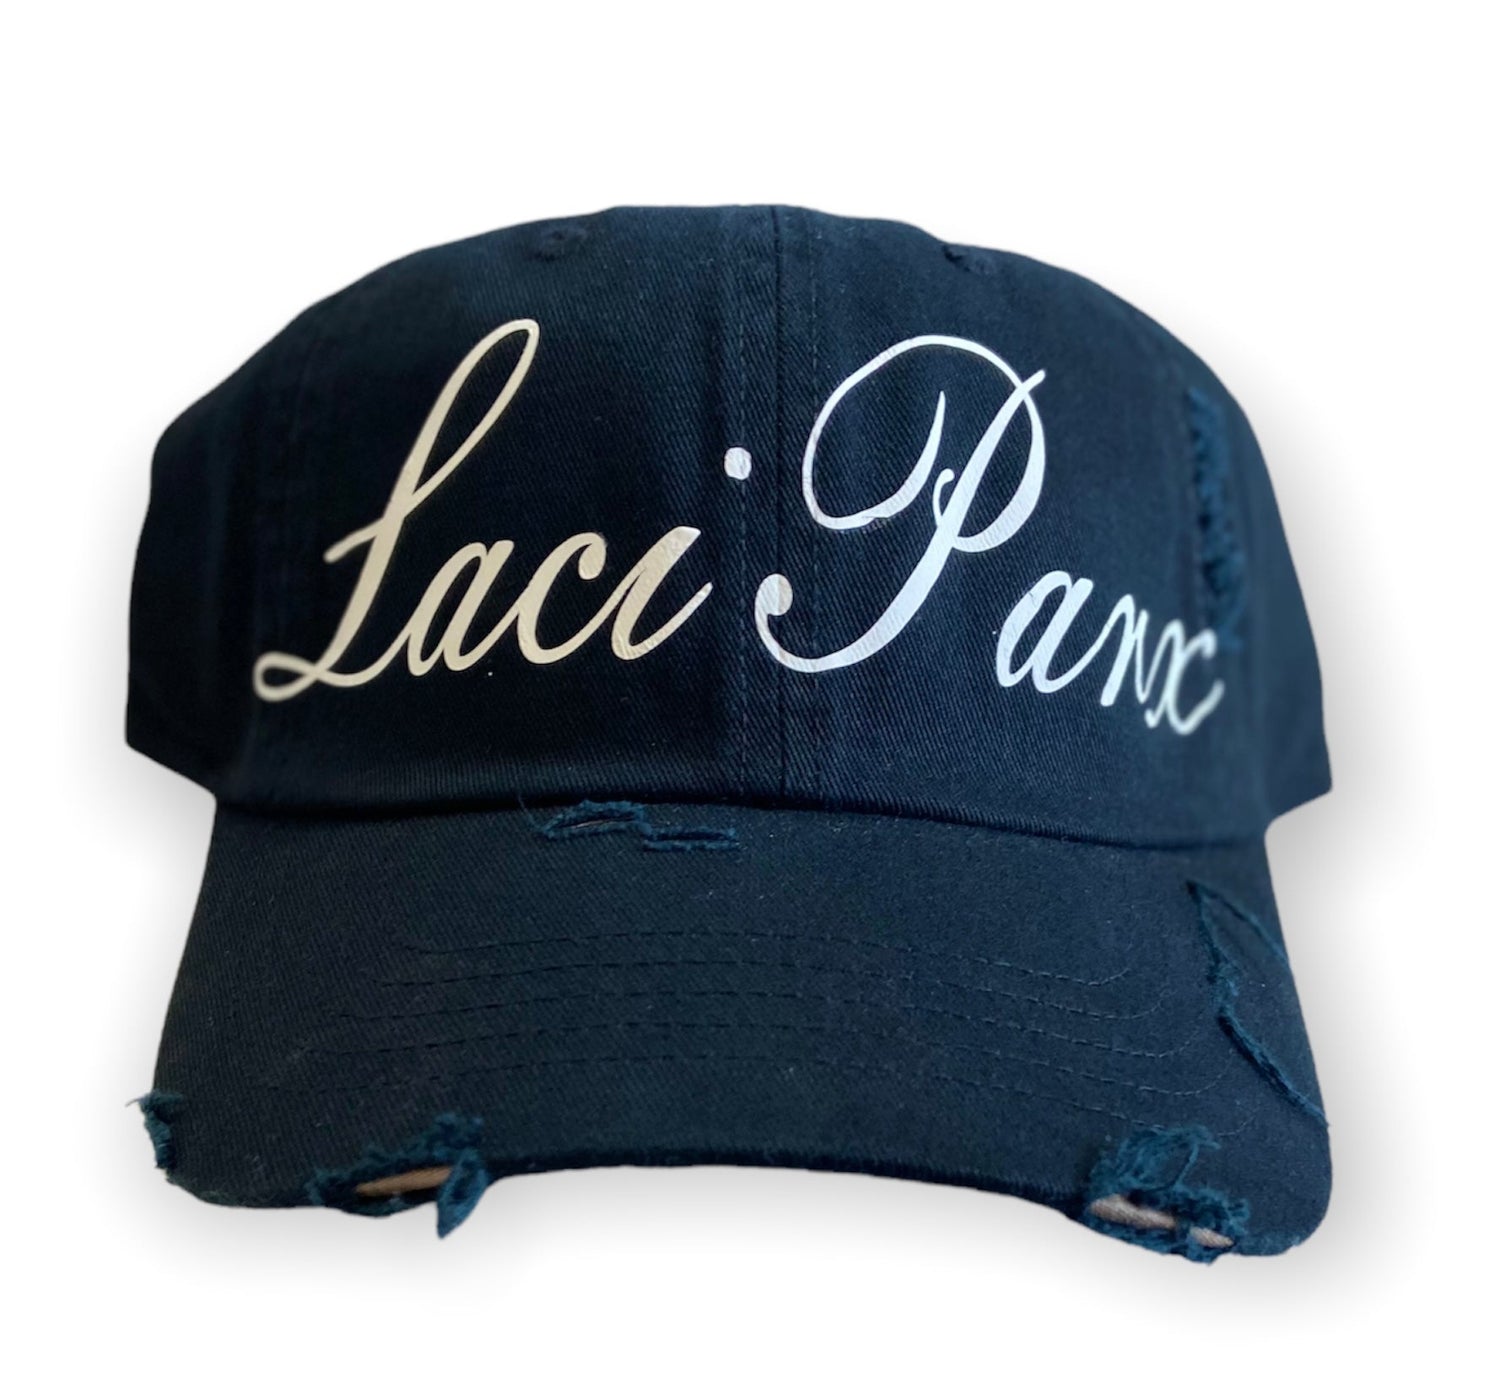 Laci Parx Clothing & Accessories